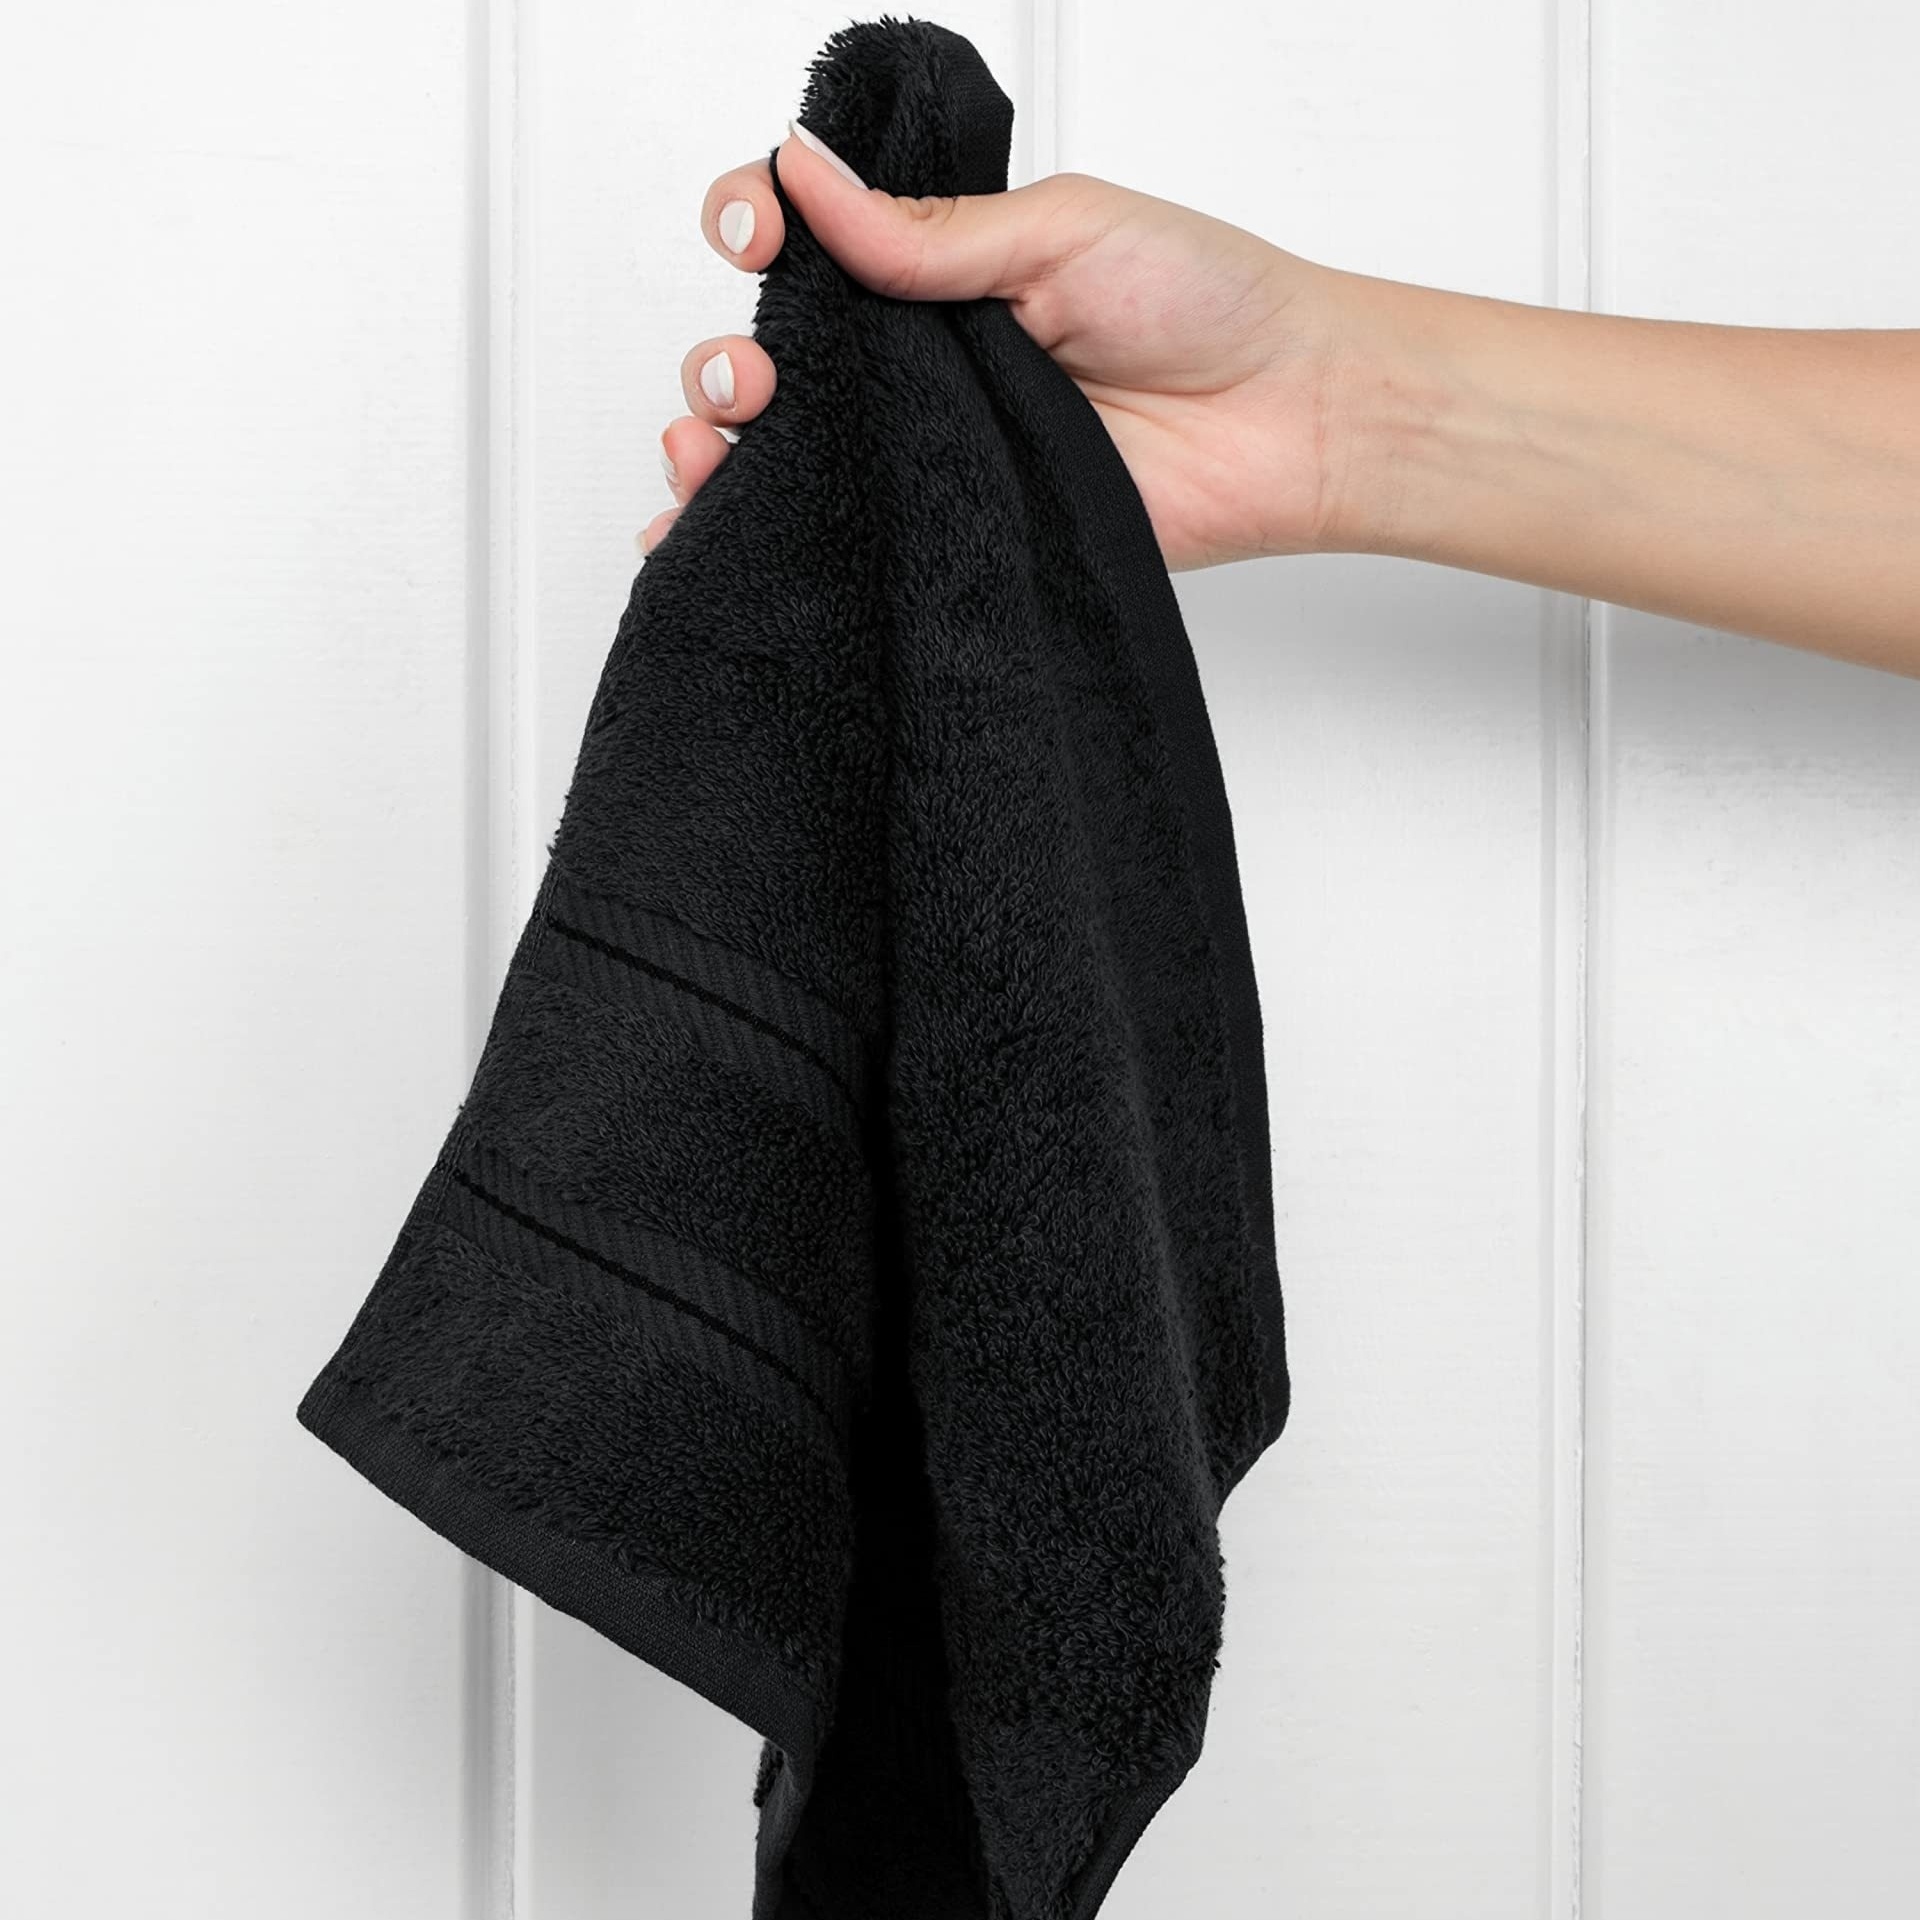 Black Bathroom Towels at